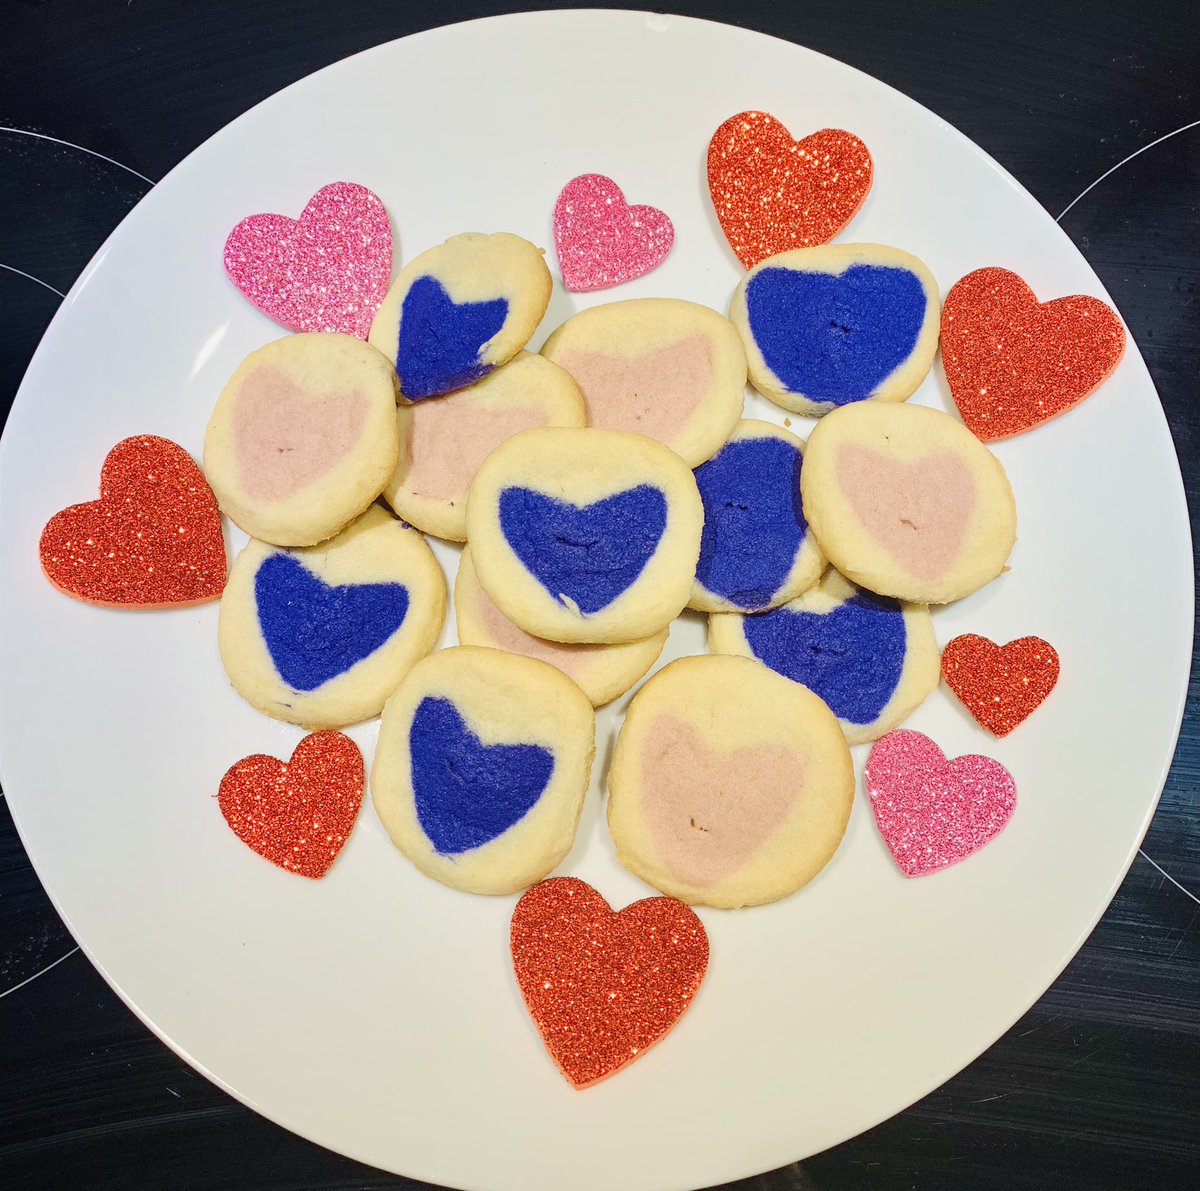 Katalina’s Heart Cookies! ❤️💜#HaveAHeartDay #JourneeAyezUnCoeur @Snoopy @MmeNaccarato